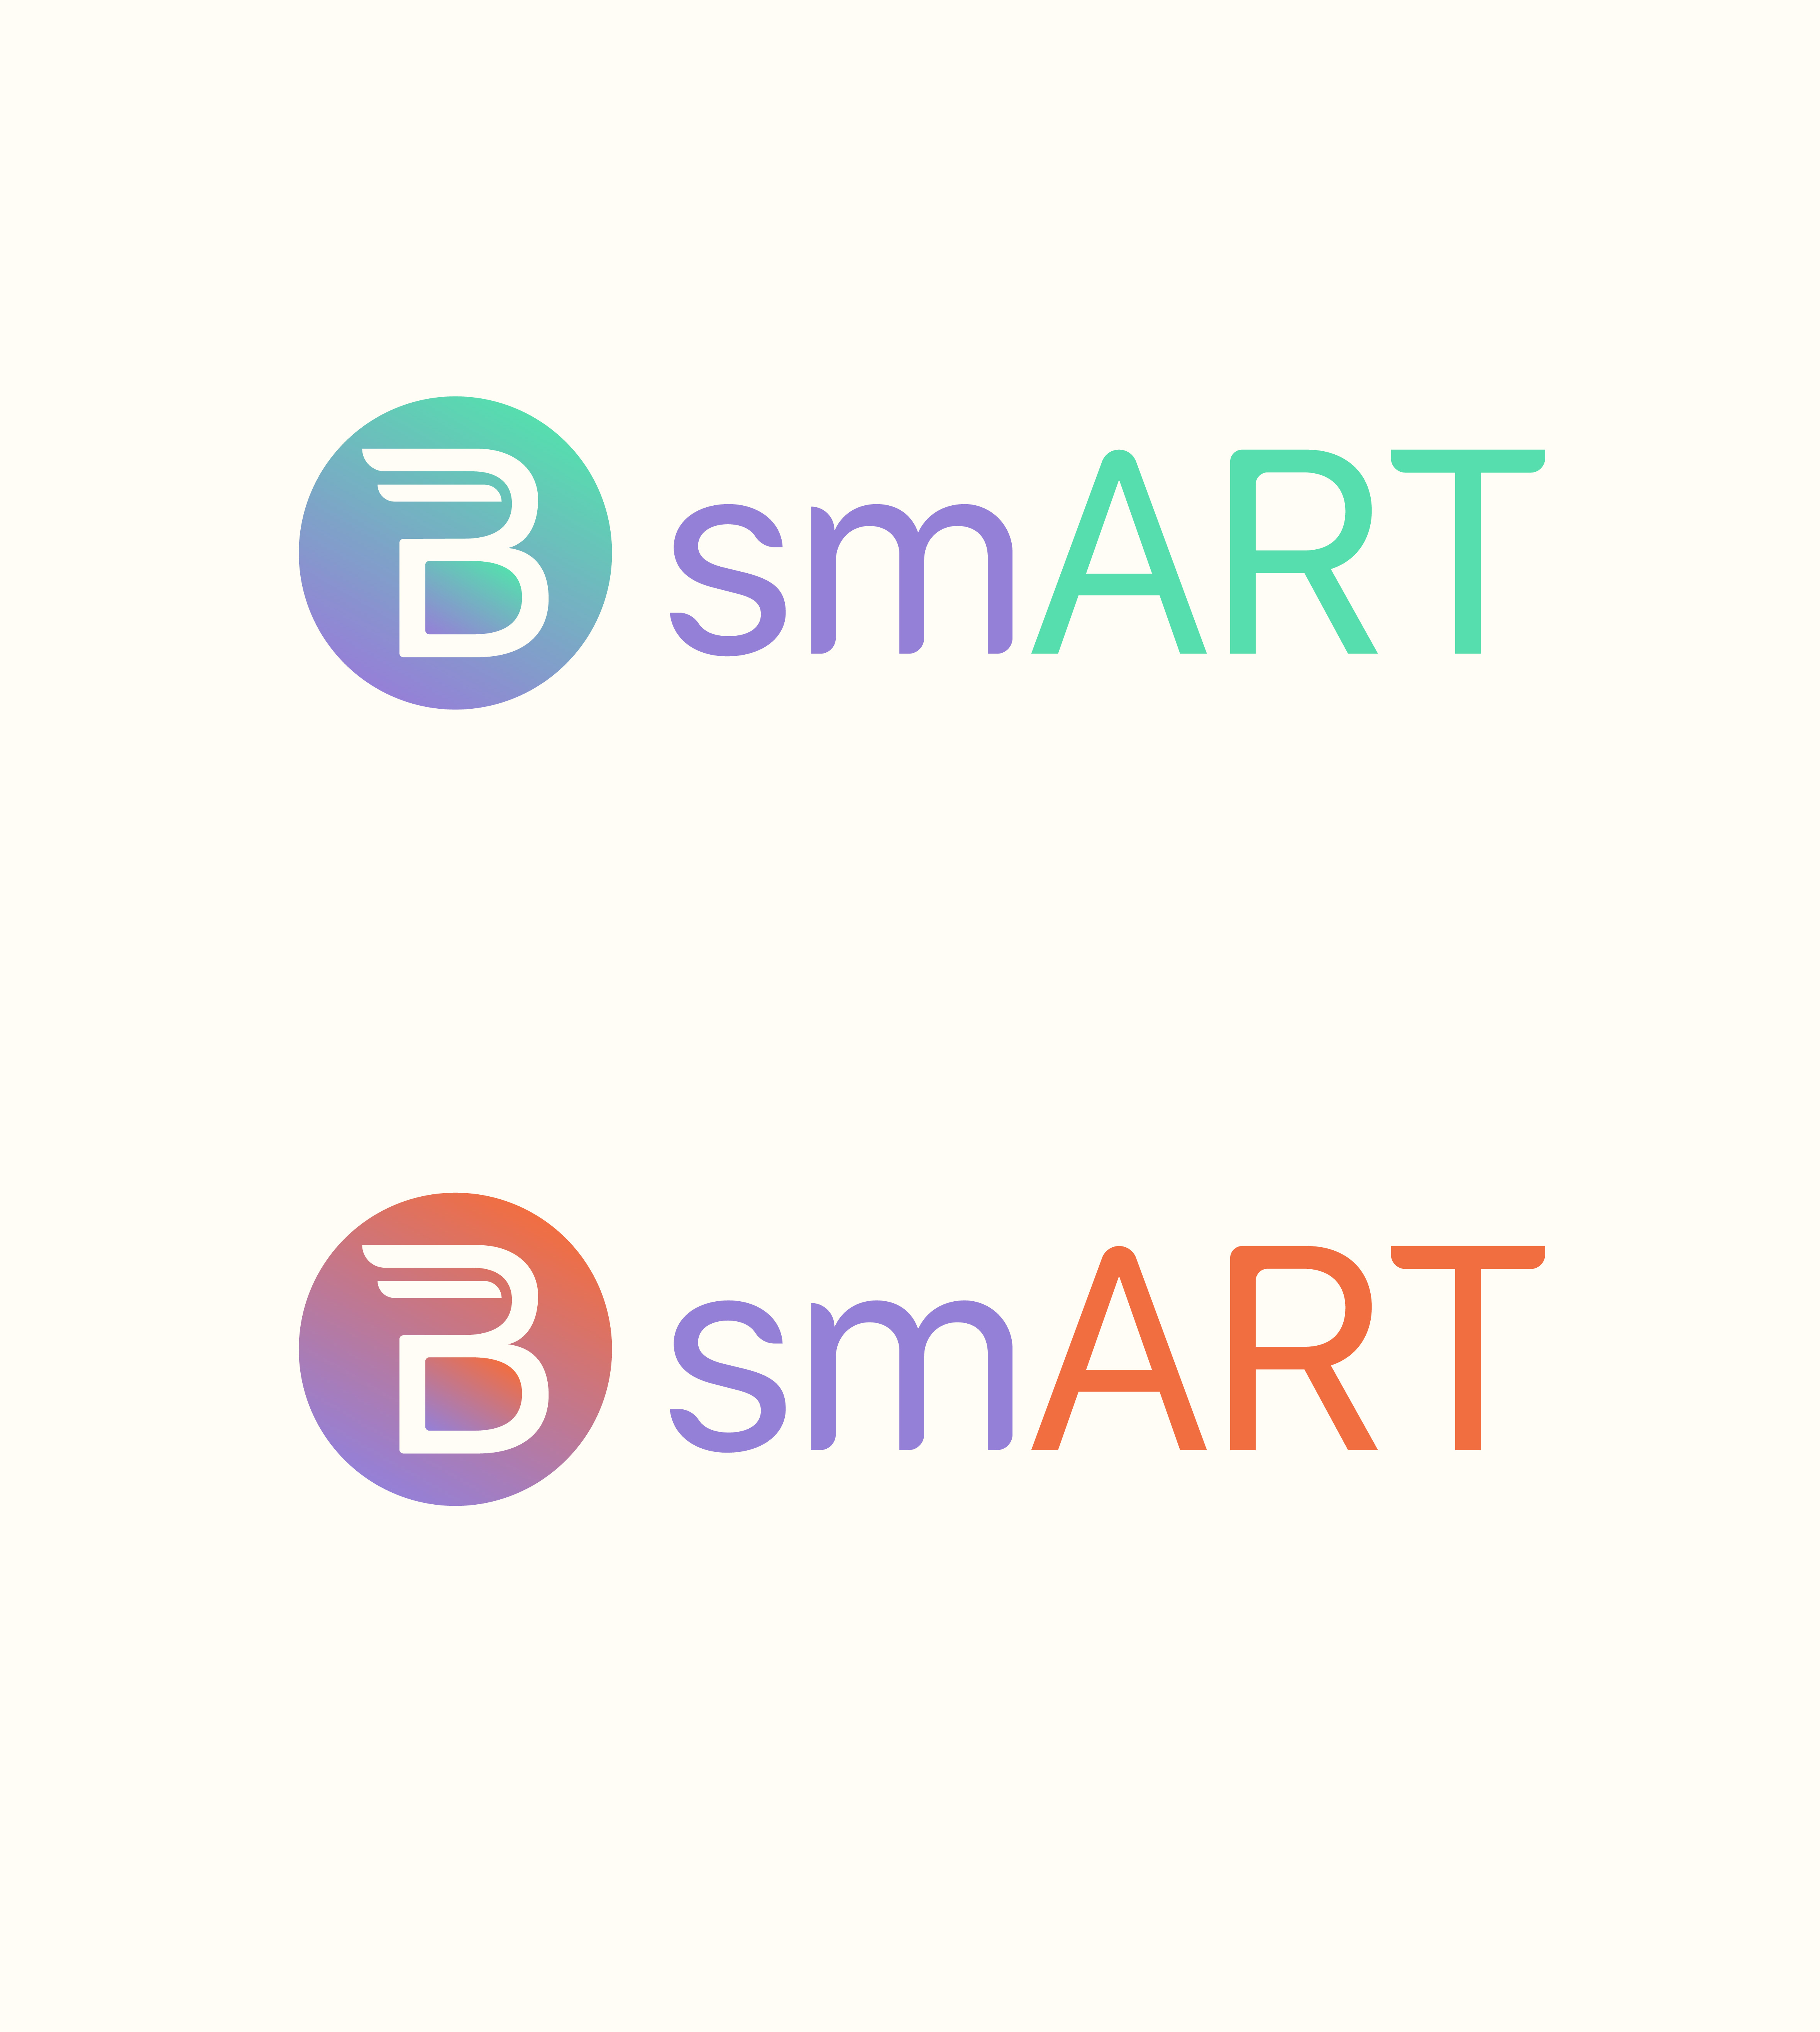 b smart 2 version.jpg